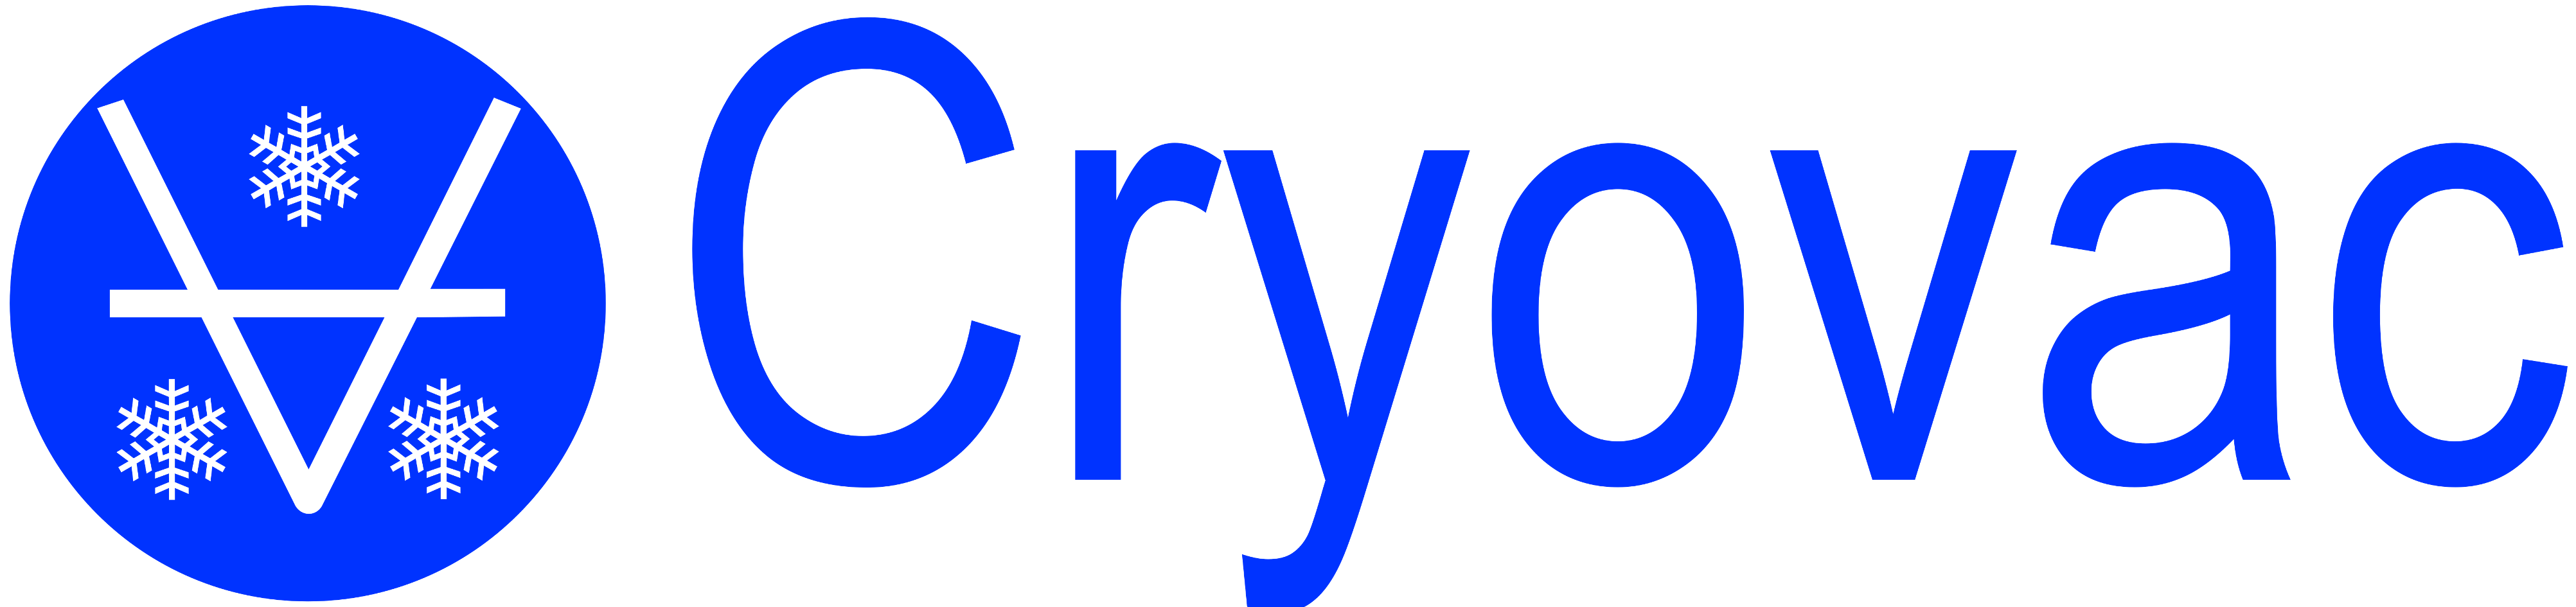 Logo Cryovac